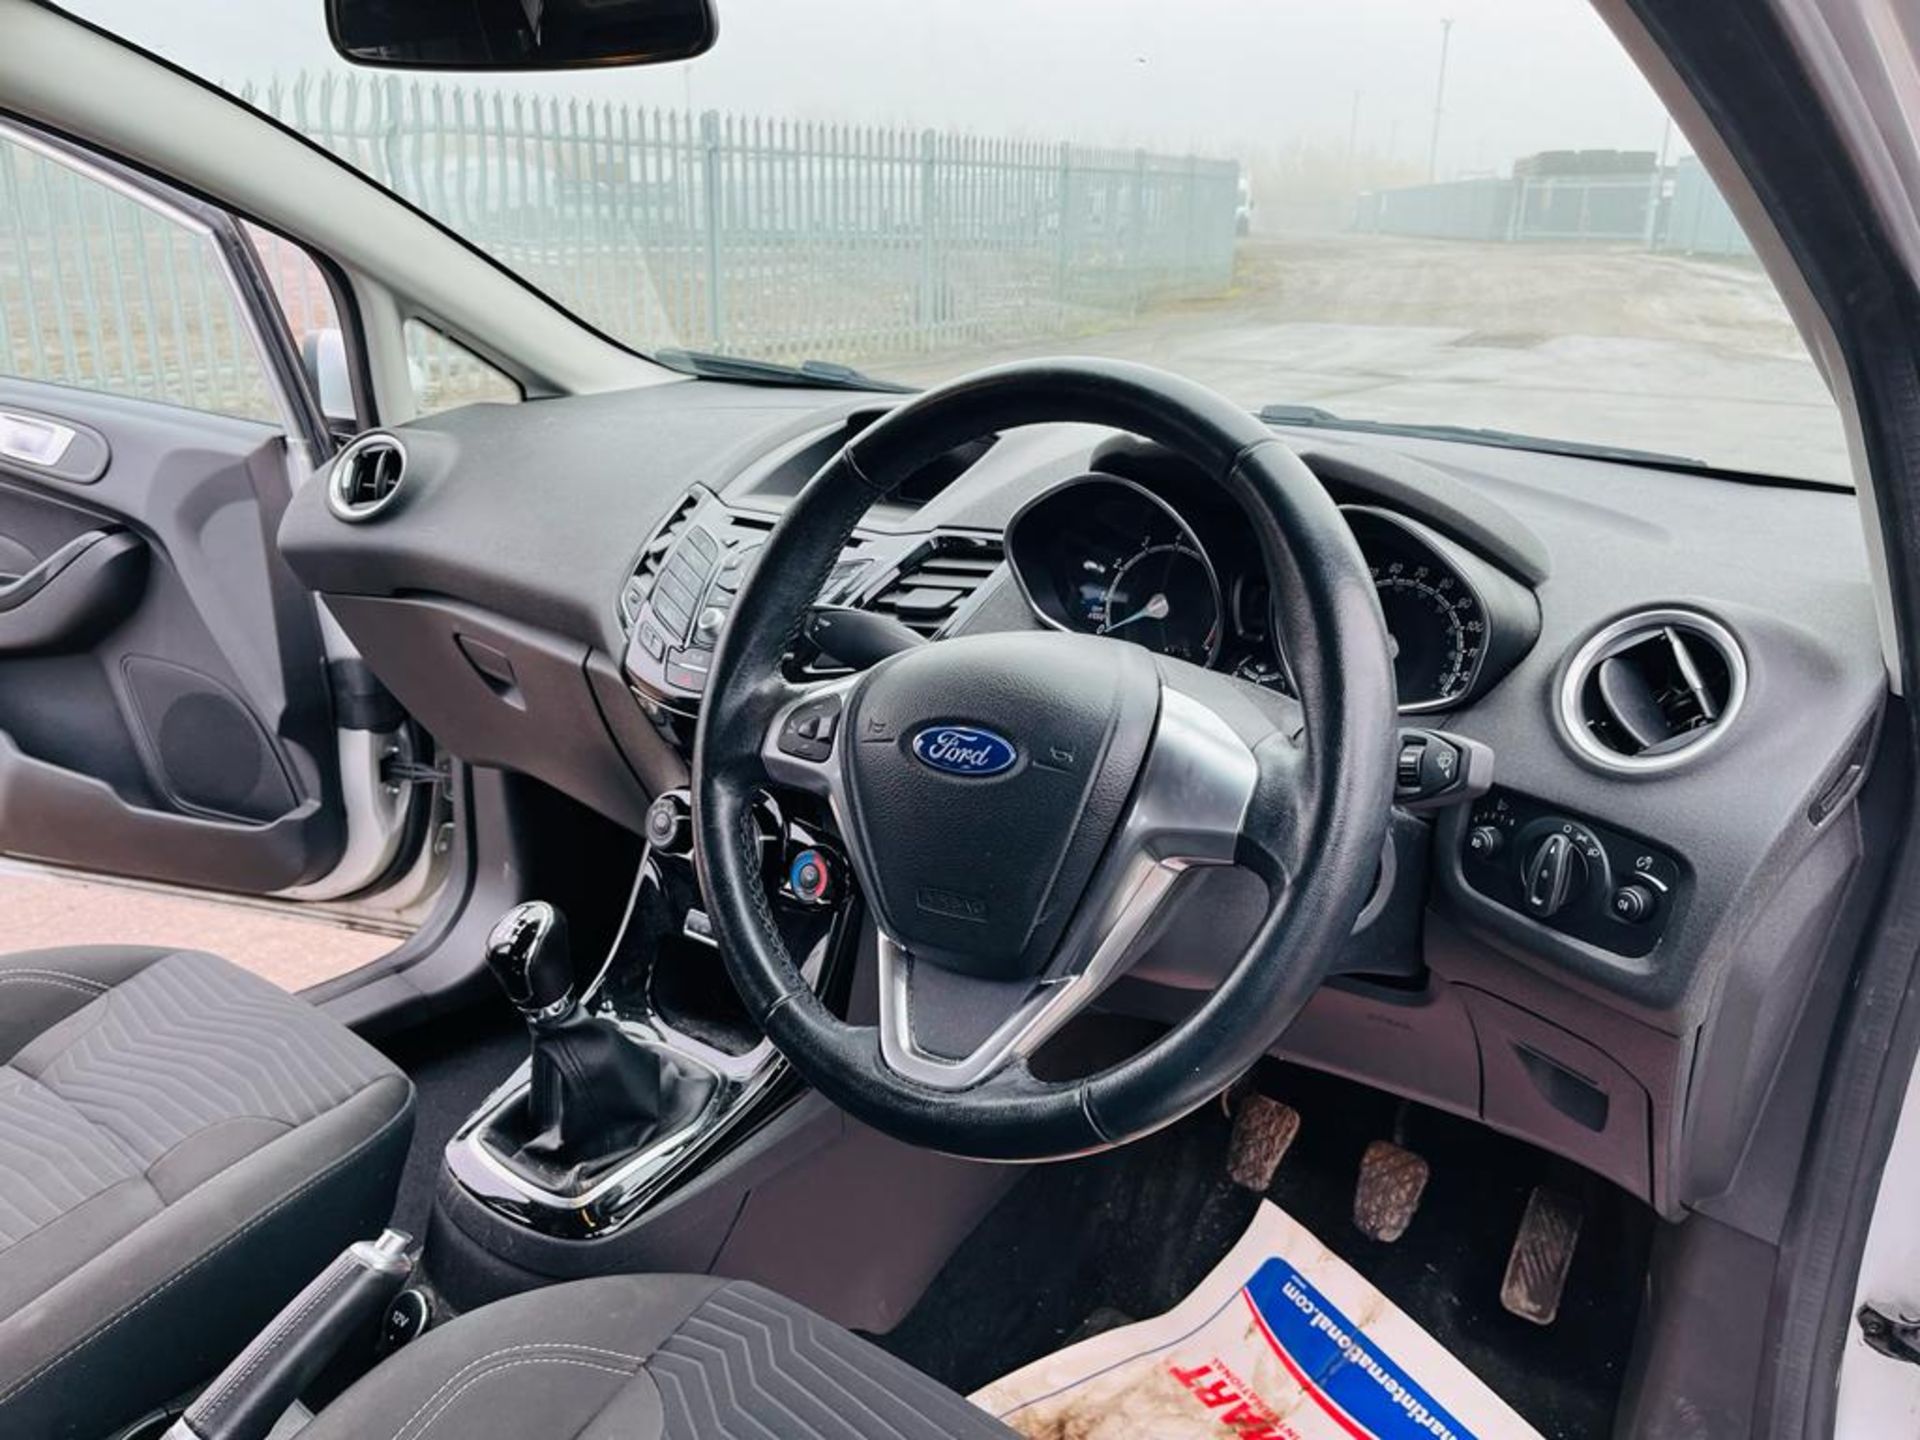 ** ON SALE ** Ford Fiesta 1.0 T EcoBoost Zetec Turbo 2017 '17 Reg' A/C - ULEZ Compliant - Image 14 of 32